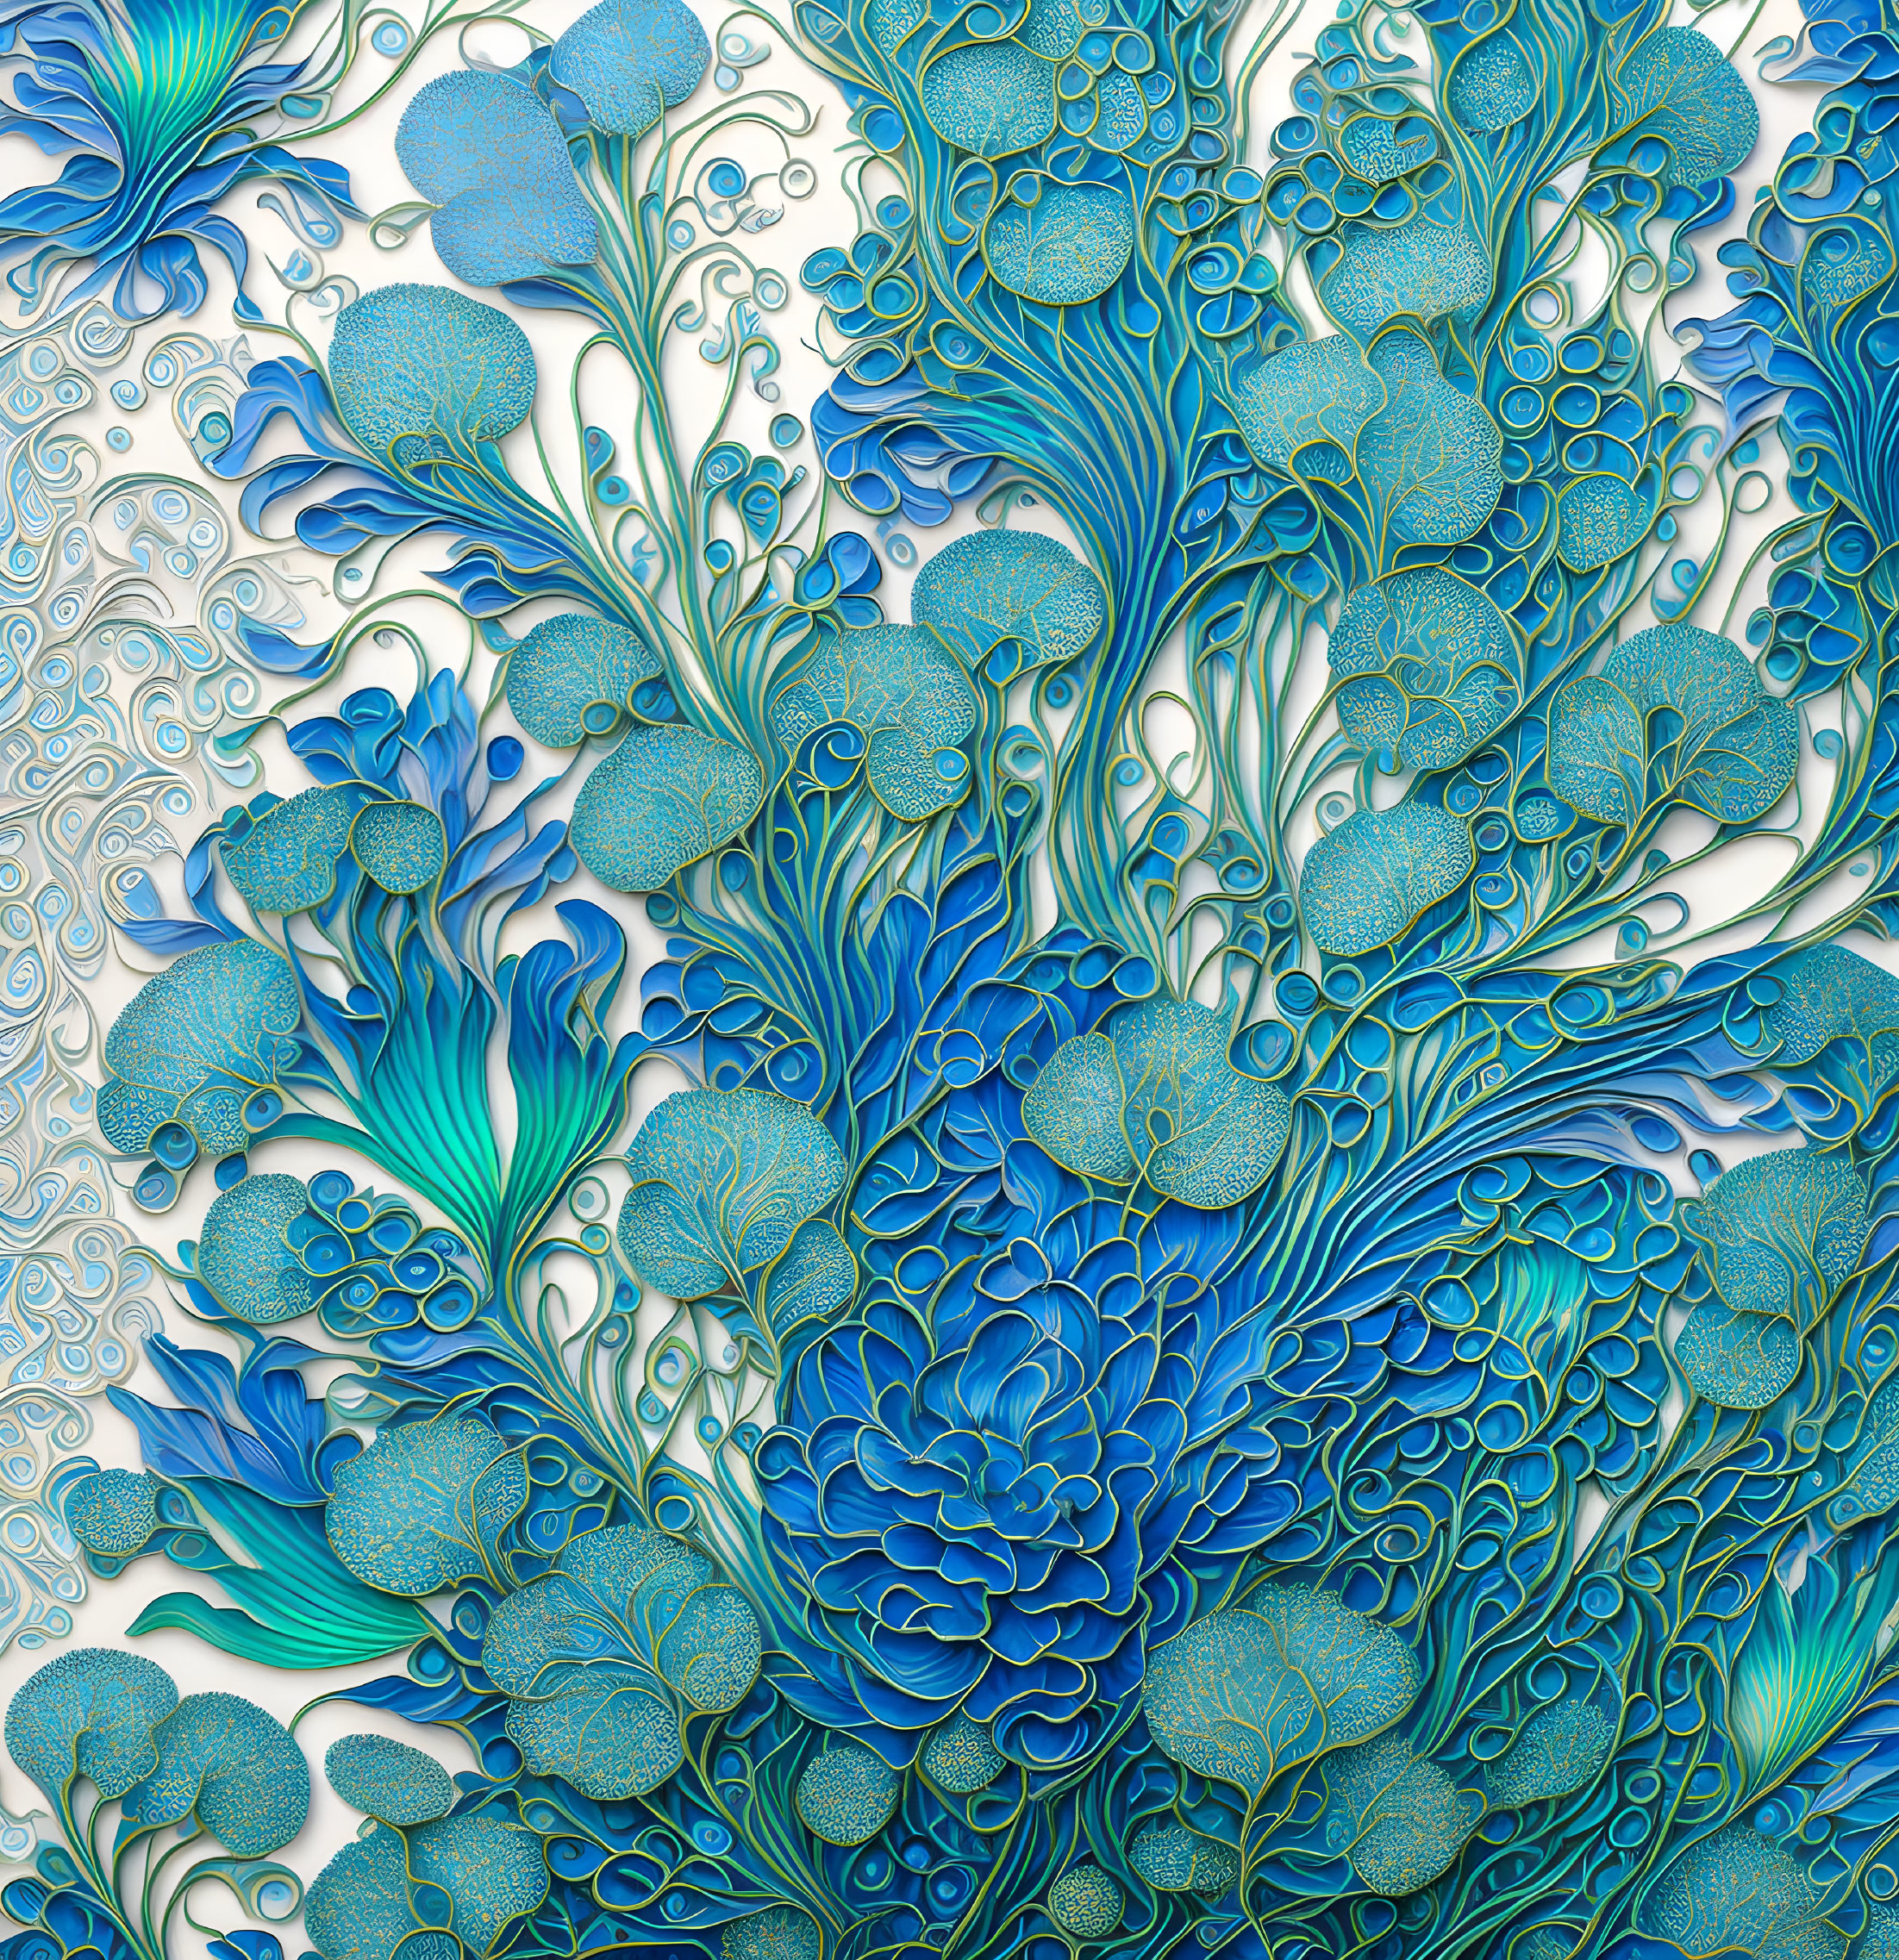 Luxurious Floral Swirls: Blue & Green